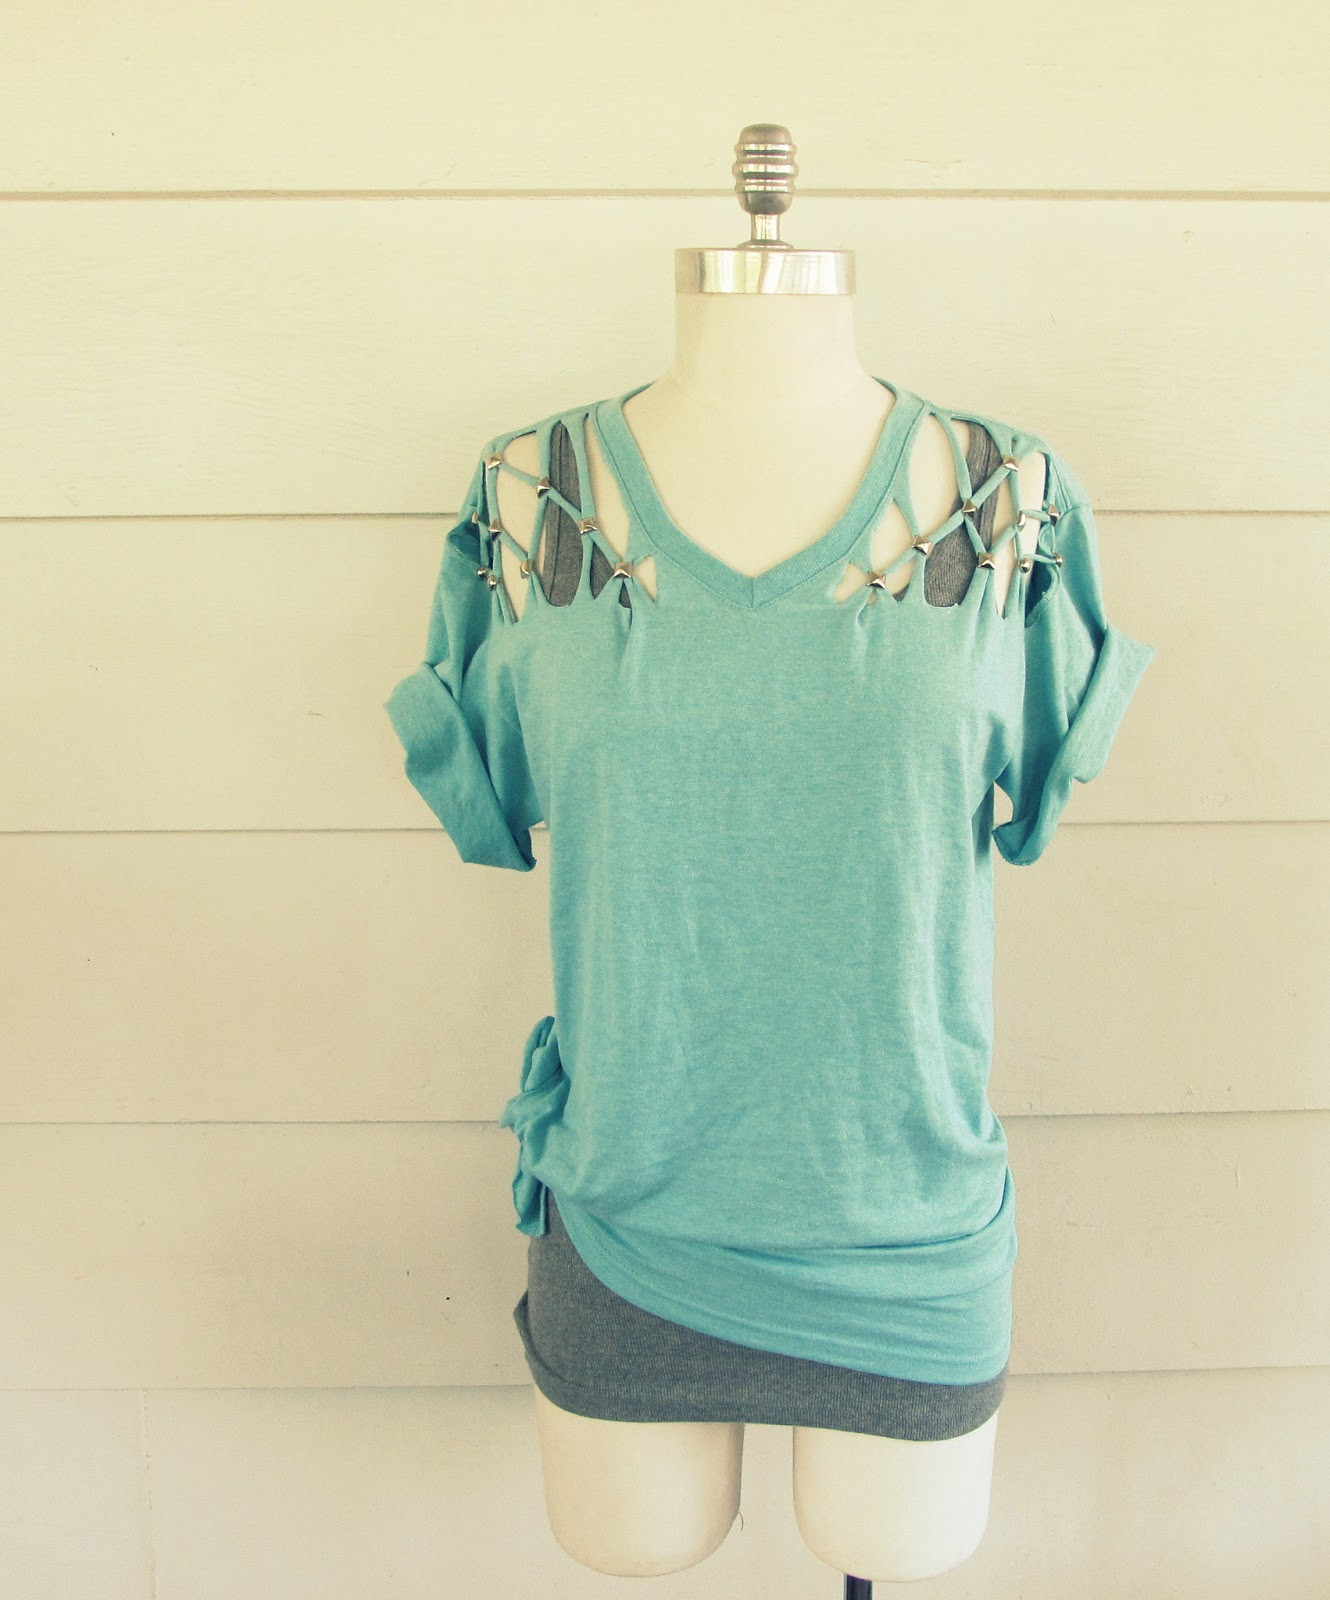 Best ideas about DIY T Shirt
. Save or Pin WobiSobi No Sew Lattice Stud T shirt DIY Now.